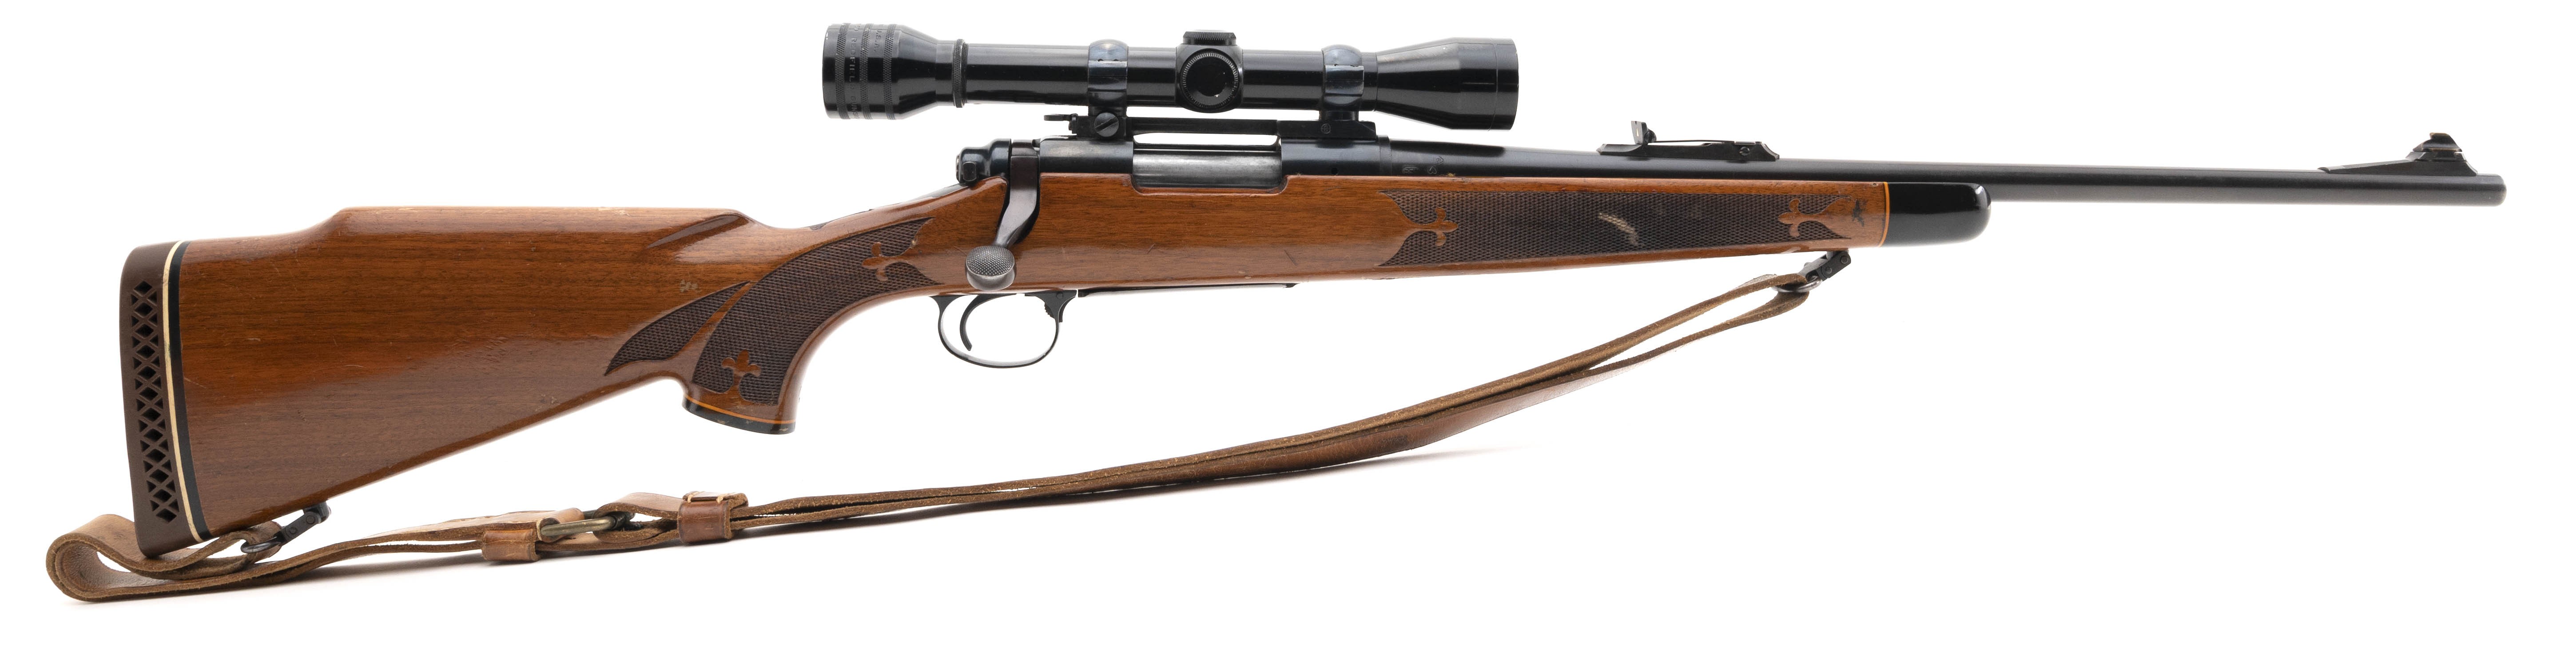 Remington 700 308 Wood Stock